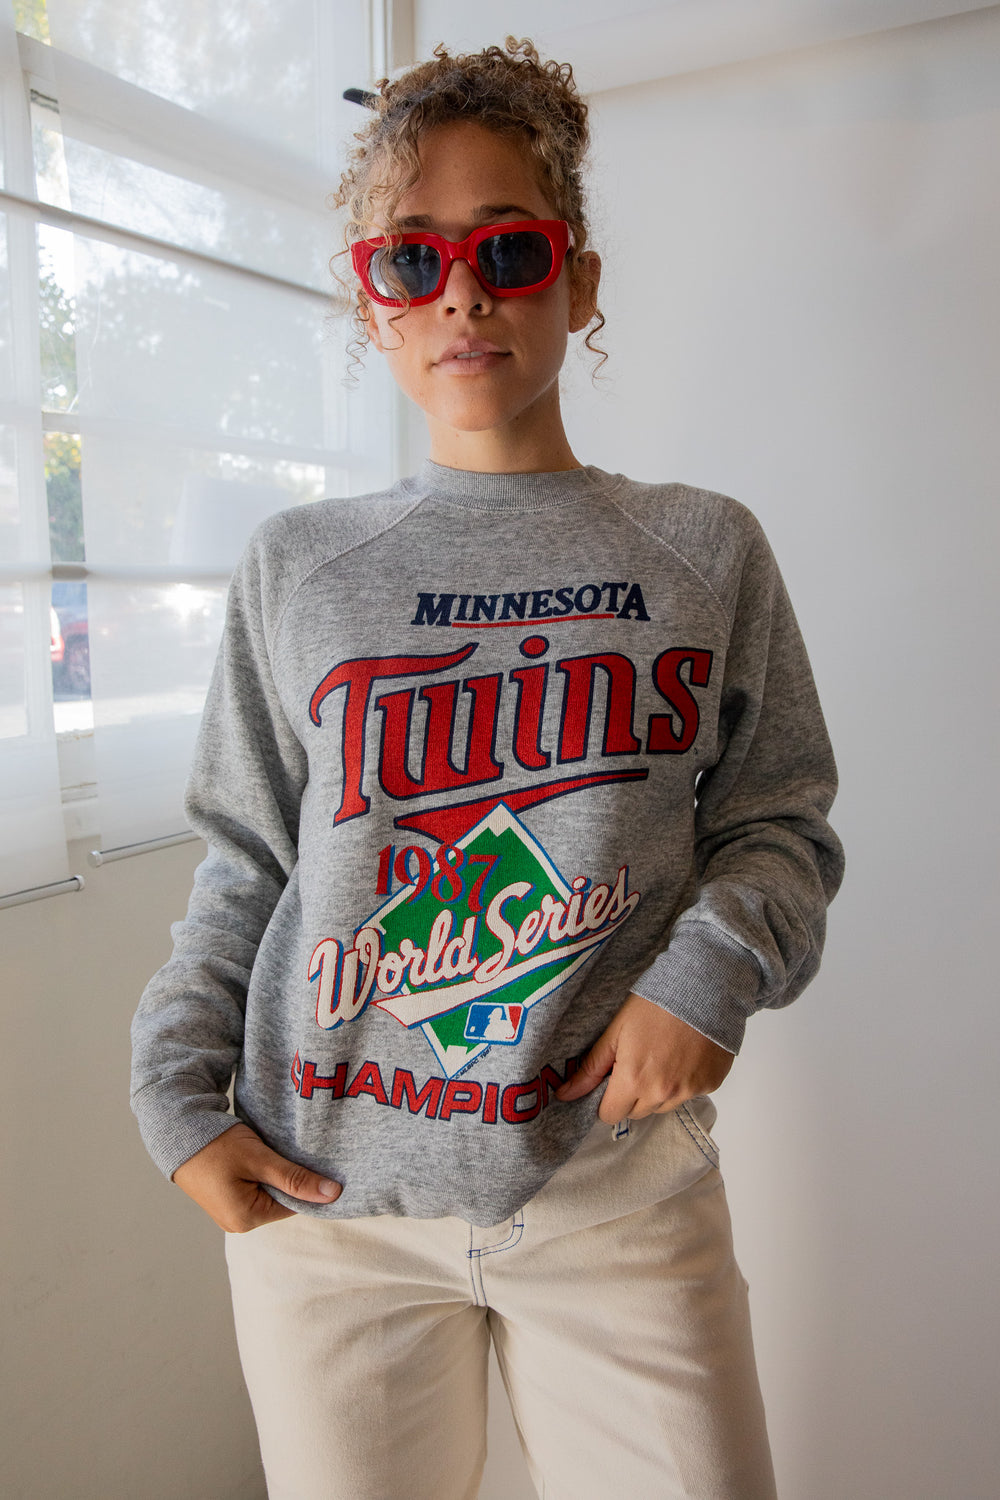 Minnesota Twins 1987 Sweatshirt